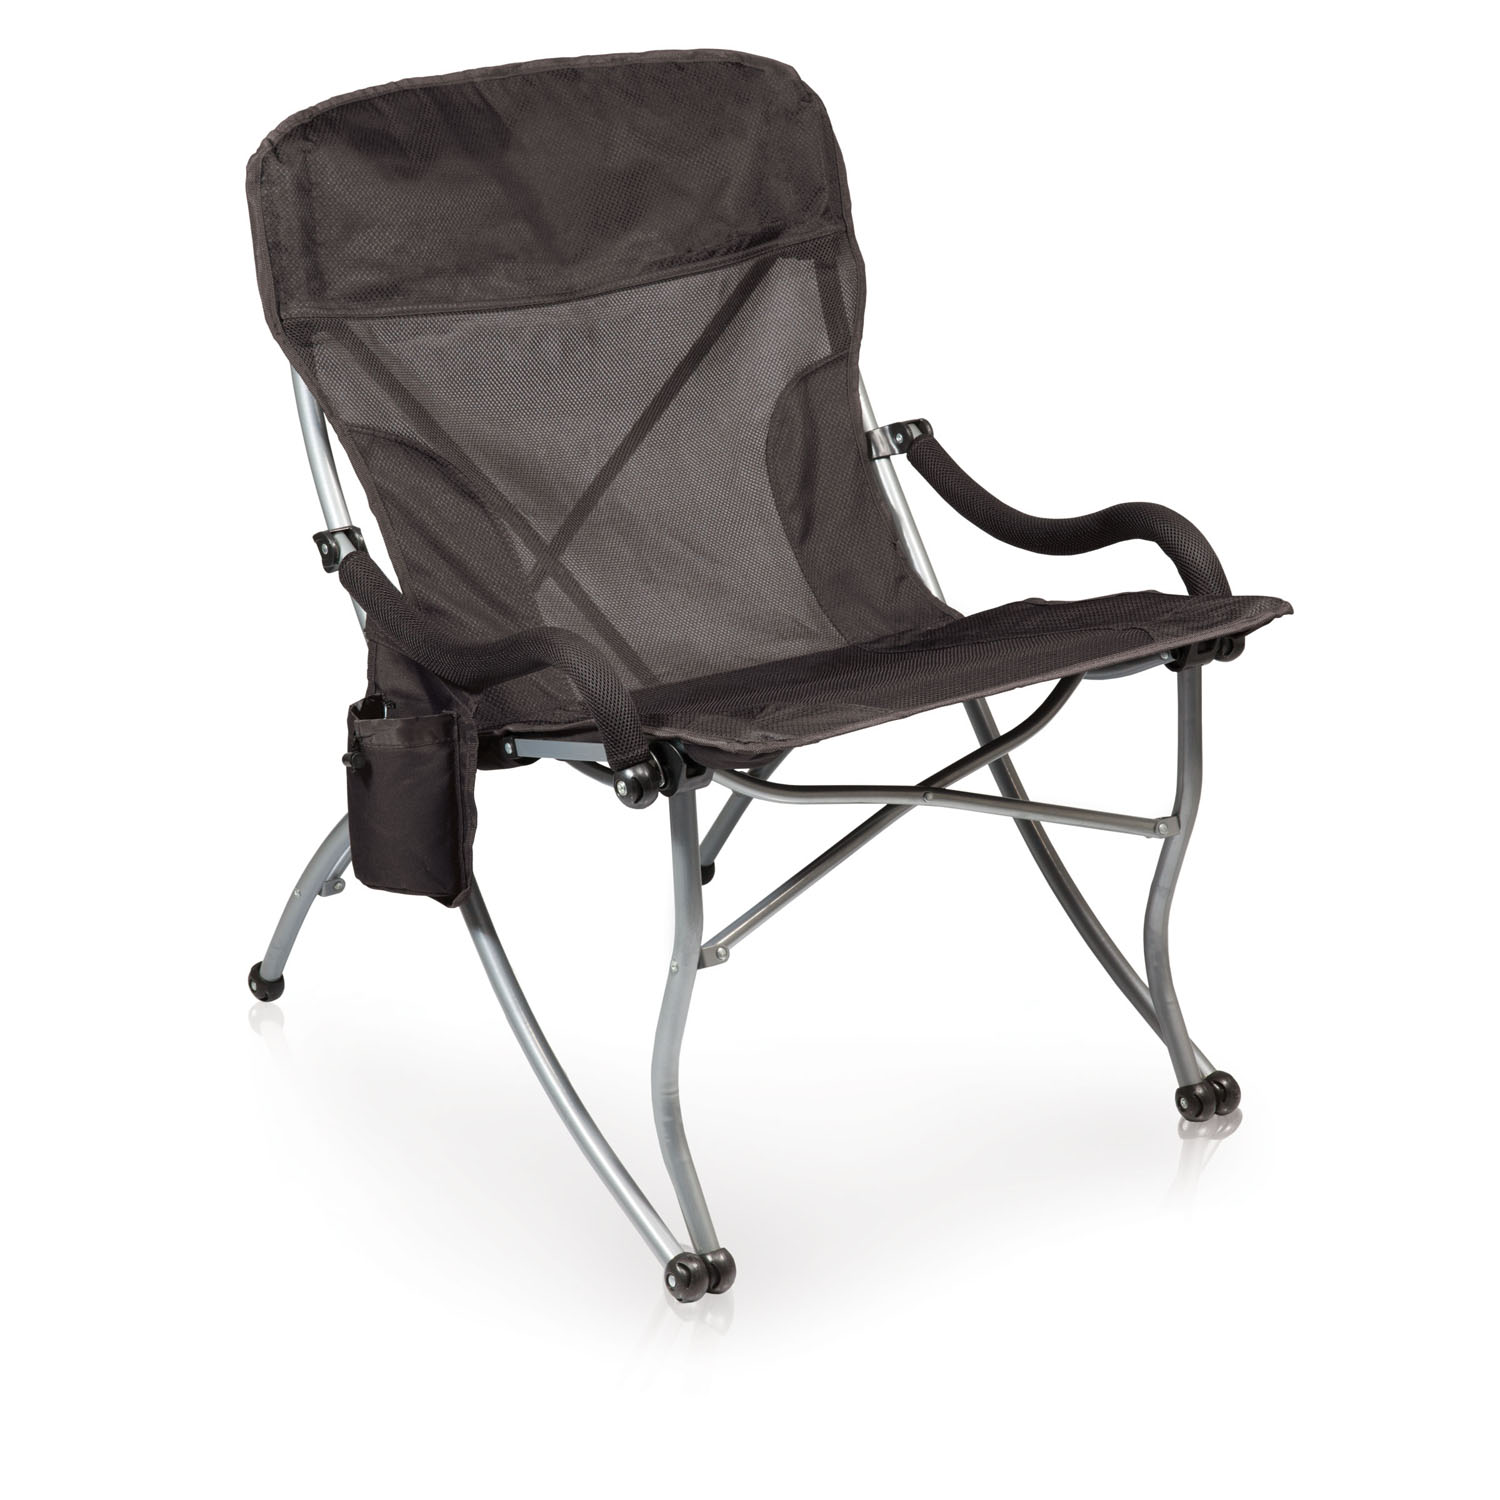 Picnic Time PT-XL Portable Folding Camp Chair - Black - image 1 of 5